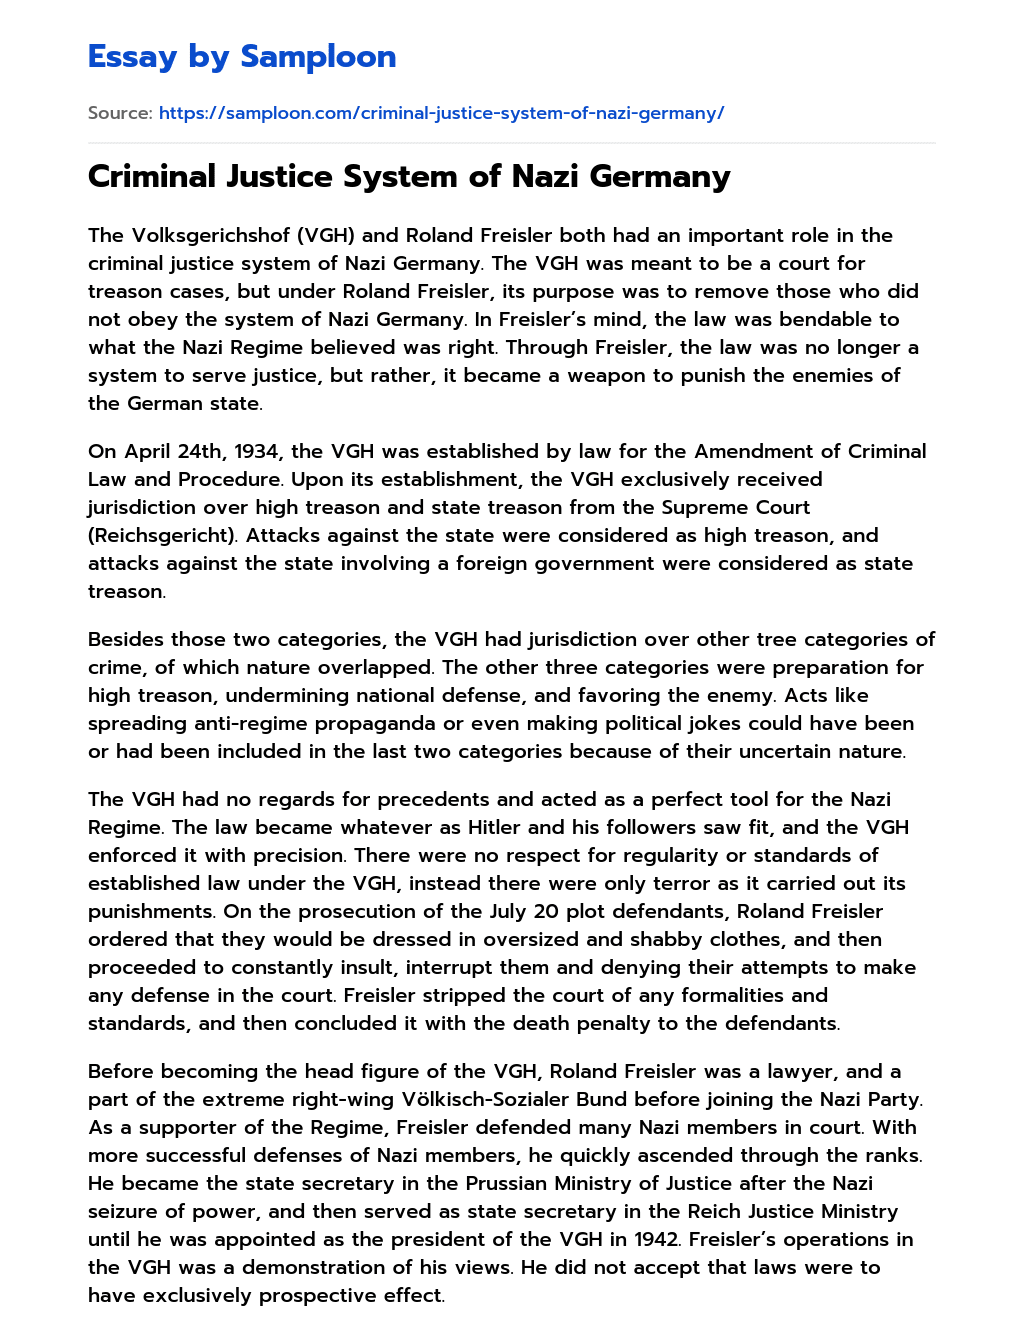 Criminal Justice System of Nazi Germany essay